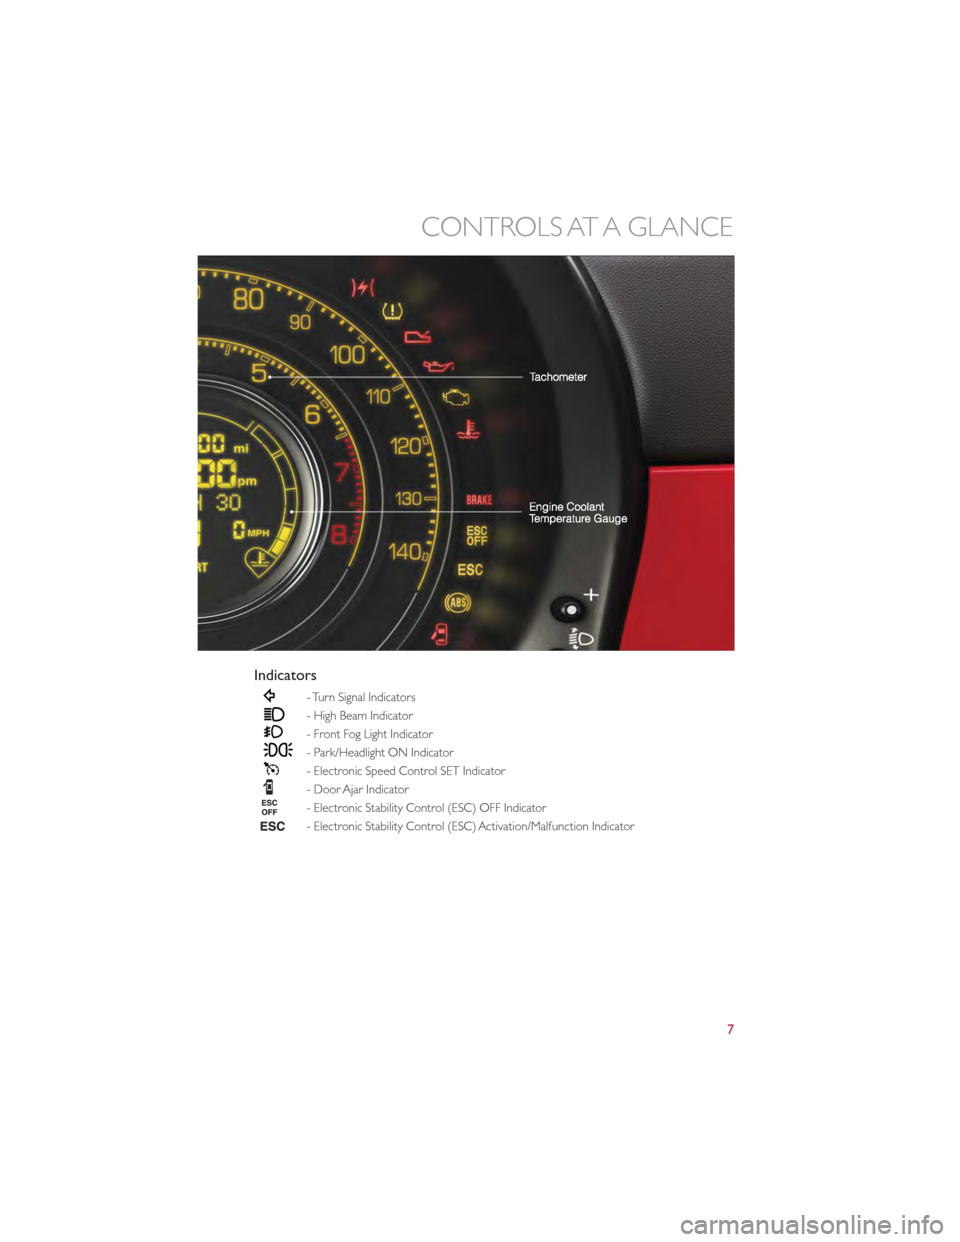 FIAT 500 GUCCI 2012 2.G User Guide Indicators
- Turn Signal Indicators
- High Beam Indicator
- Front Fog Light Indicator
- Park/Headlight ON Indicator
- Electronic Speed Control SET Indicator
- Door Ajar Indicator
- Electronic Stabilit